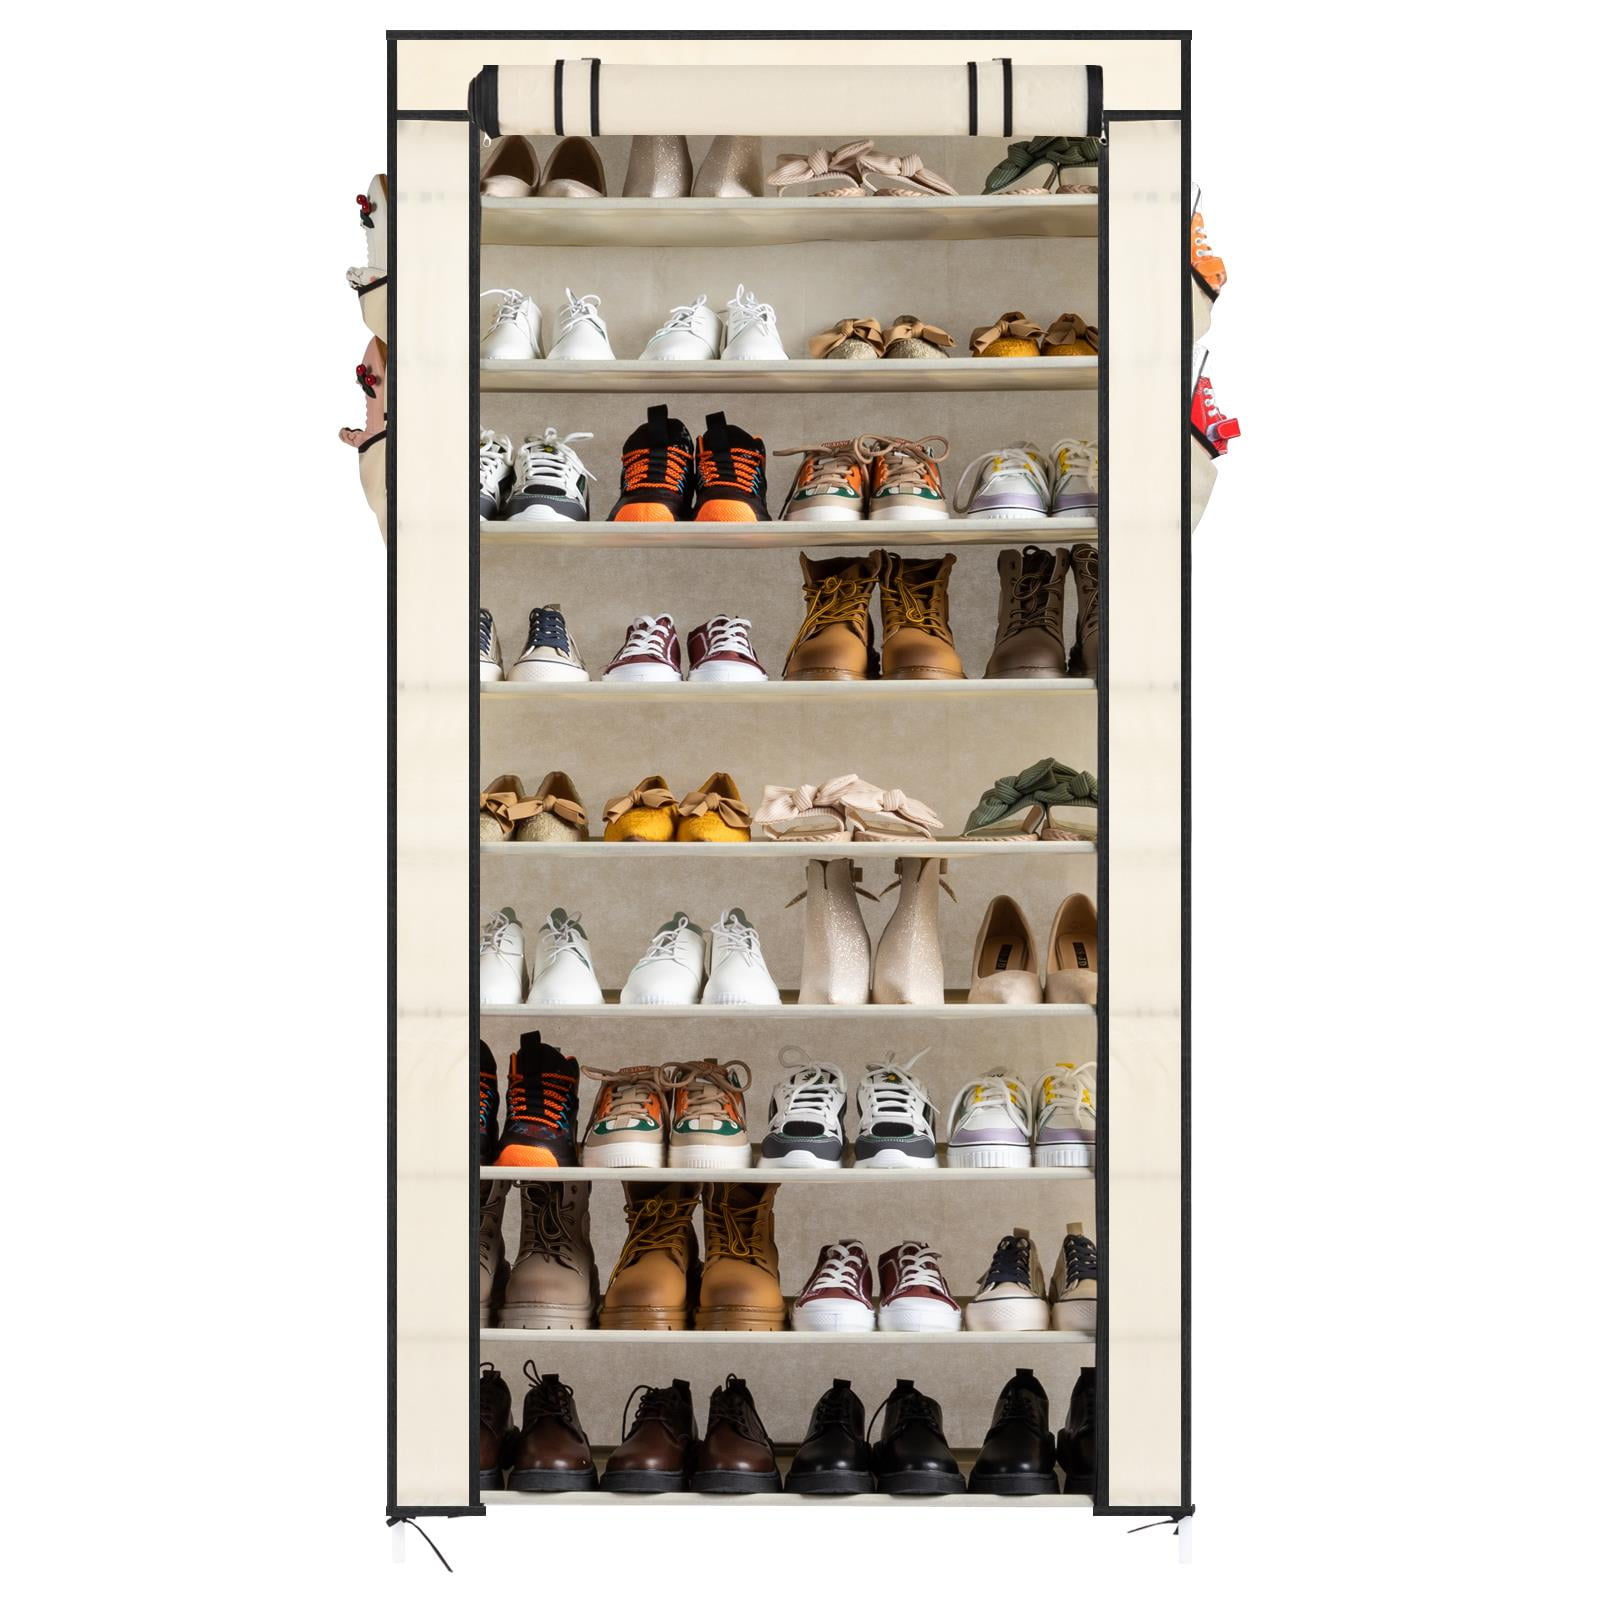 7-Tier Dual Shoe Rack Free Standing Shelves Storage Shelves Concise-Black - 18 x 10.5 x 43.5